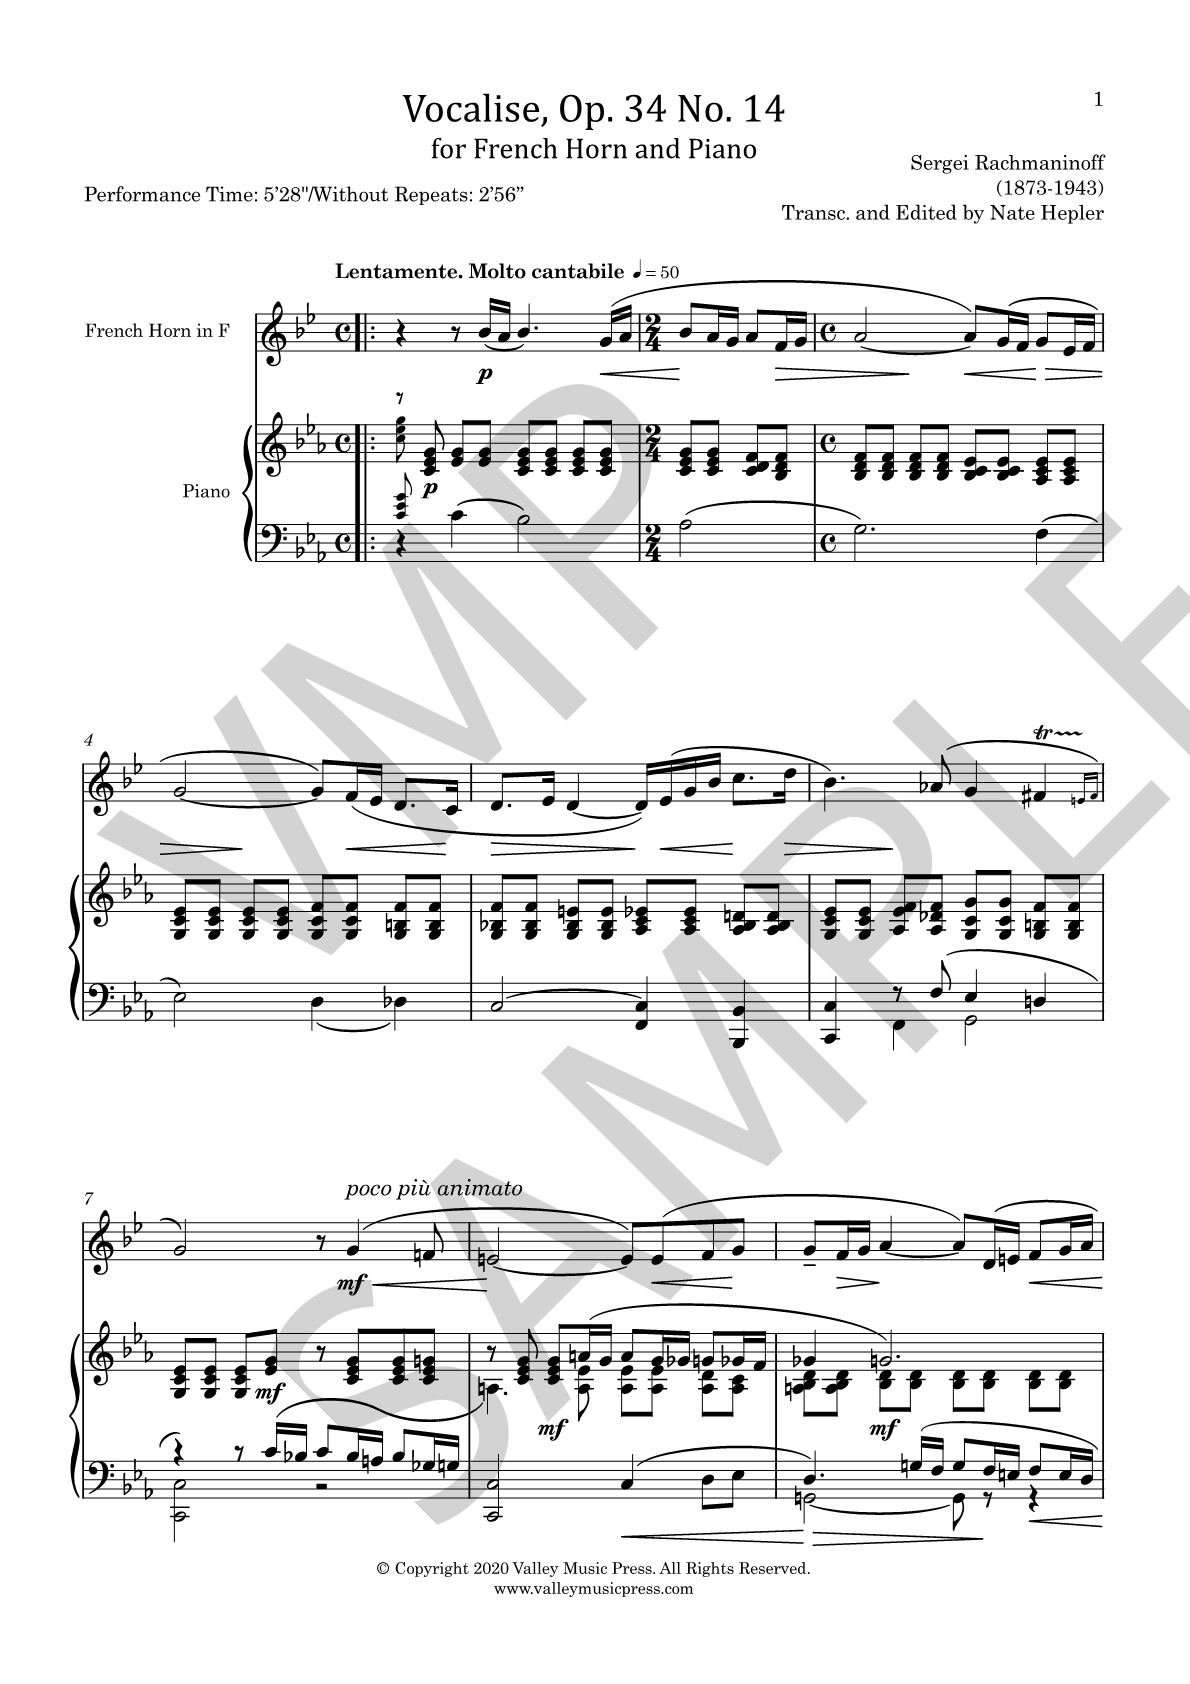 Rachmaninoff - Vocalise Op. 34 No. 14 (Hrn & Piano)